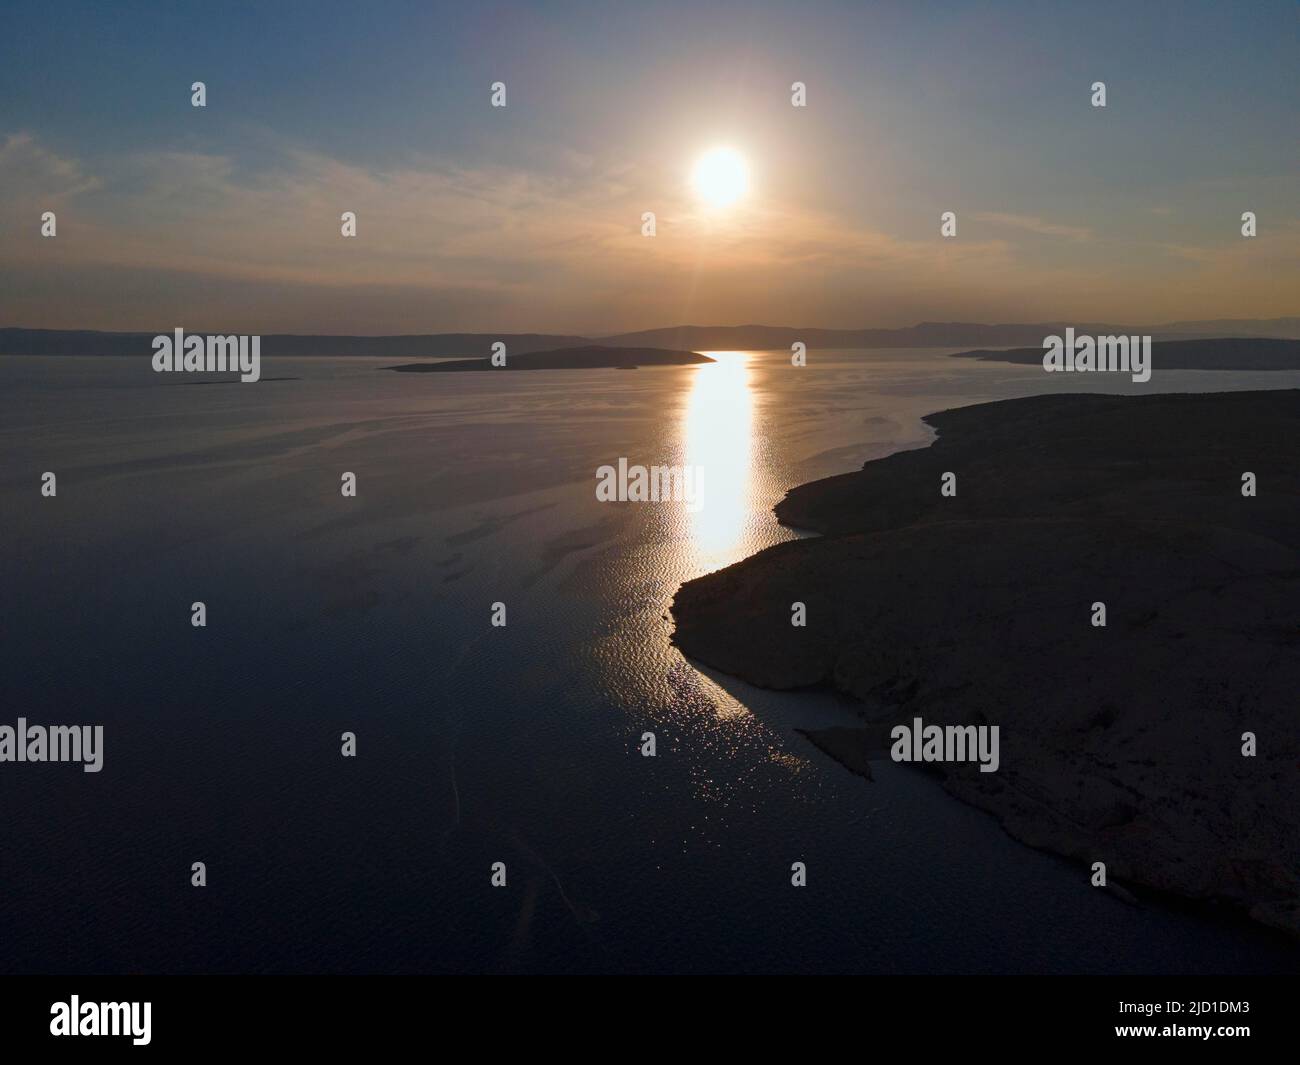 Colpo di drone, montagne carsiche al tramonto, Stara Baska, Stara Baska, Isola di Krk, Golfo del Quarnero, Primorje-Gorski kotar, Croazia Foto Stock